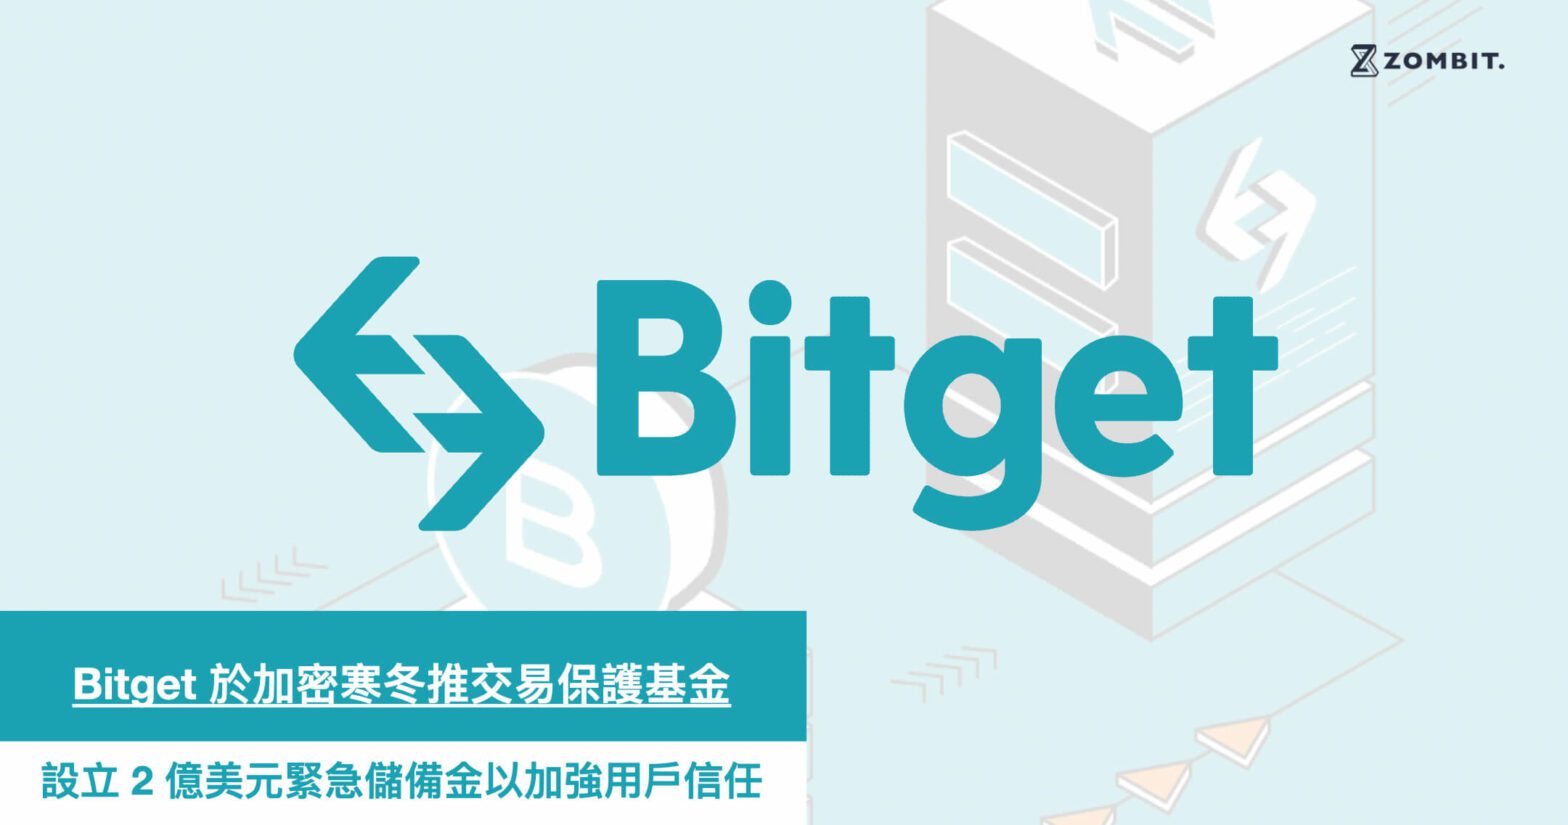 Bitget 於加密寒冬推交易保護基金，設立 2 億美元的緊急儲備金以加強用戶信任